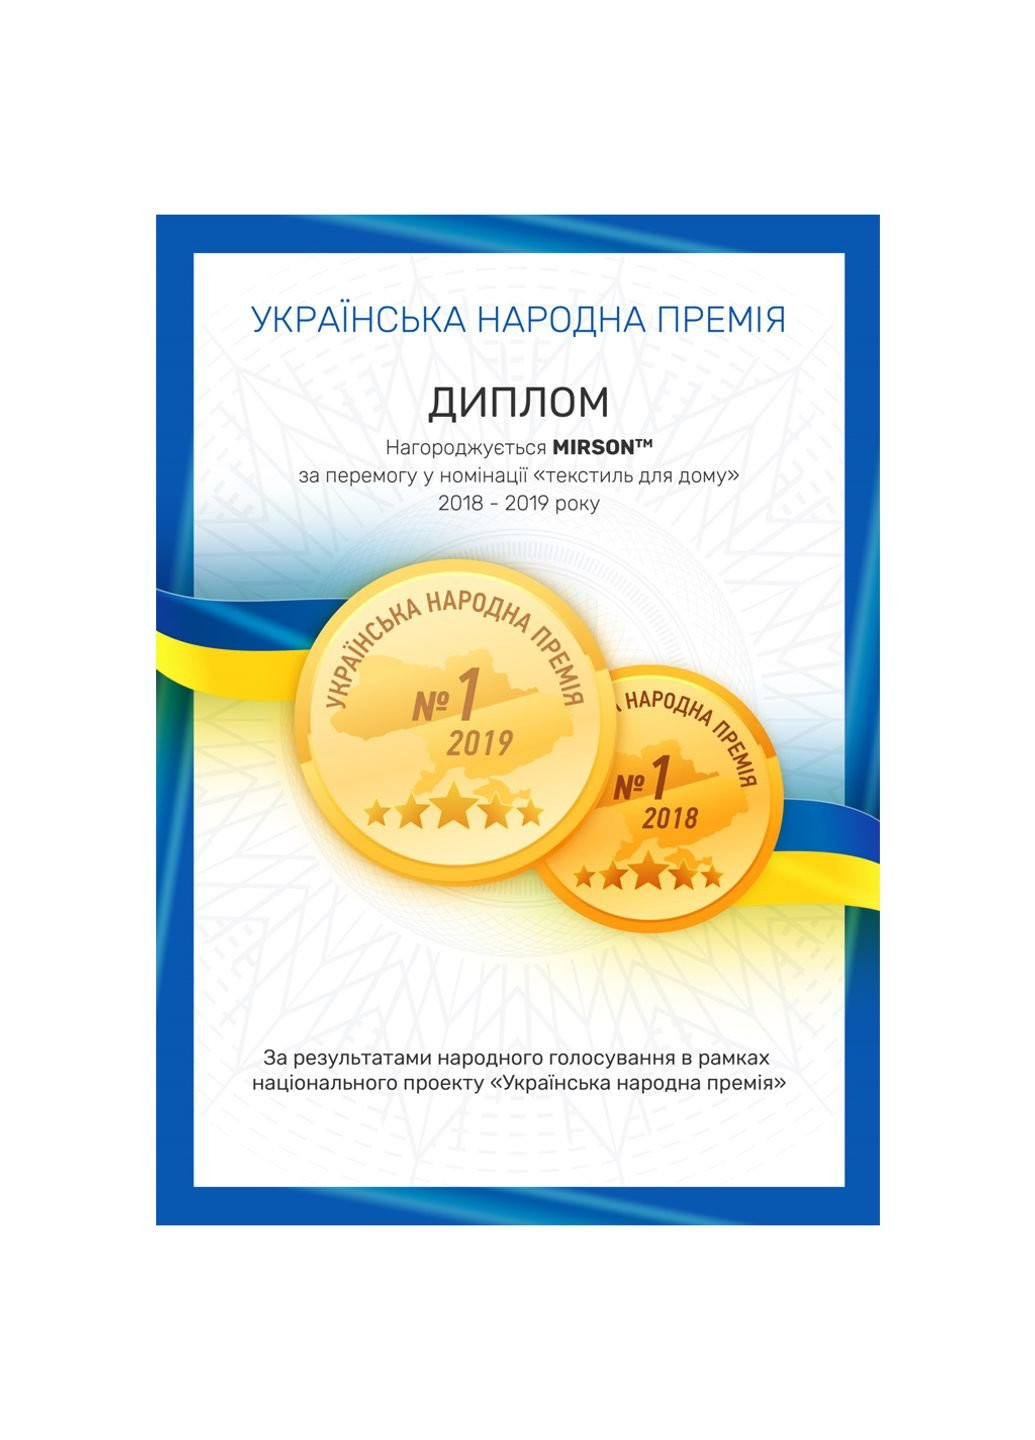 Mirson полотенце набор банный №5009 softness military 40x70, 50x90, 70x140, 1 (2200003183337) зеленый производство - Украина